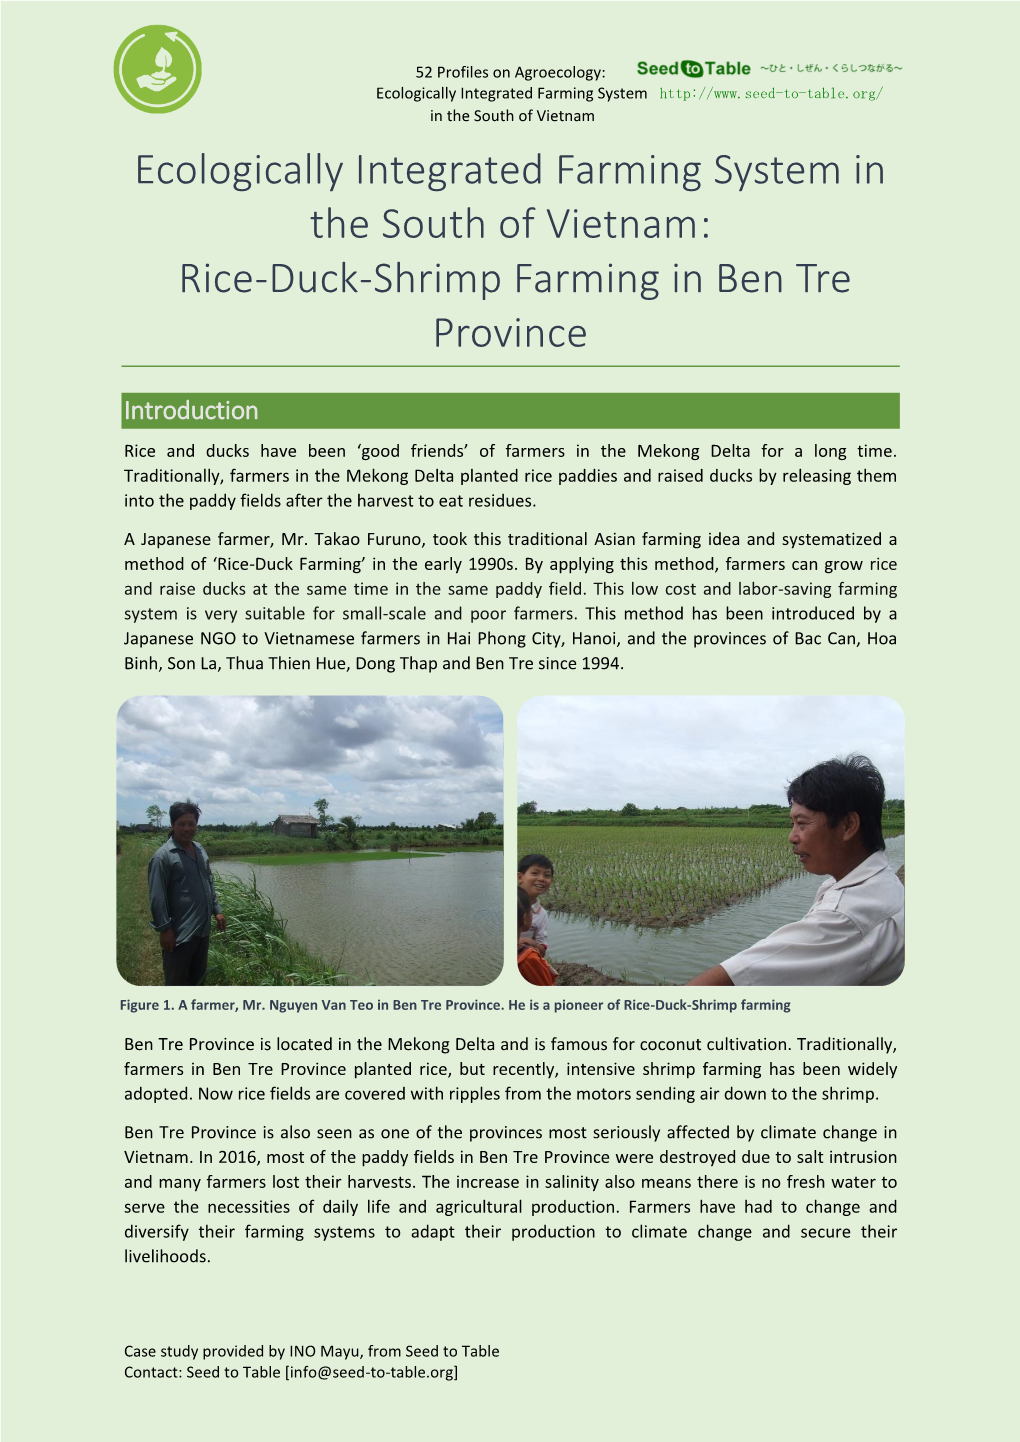 Rice-Duck-Shrimp Farming in Ben Tre Province